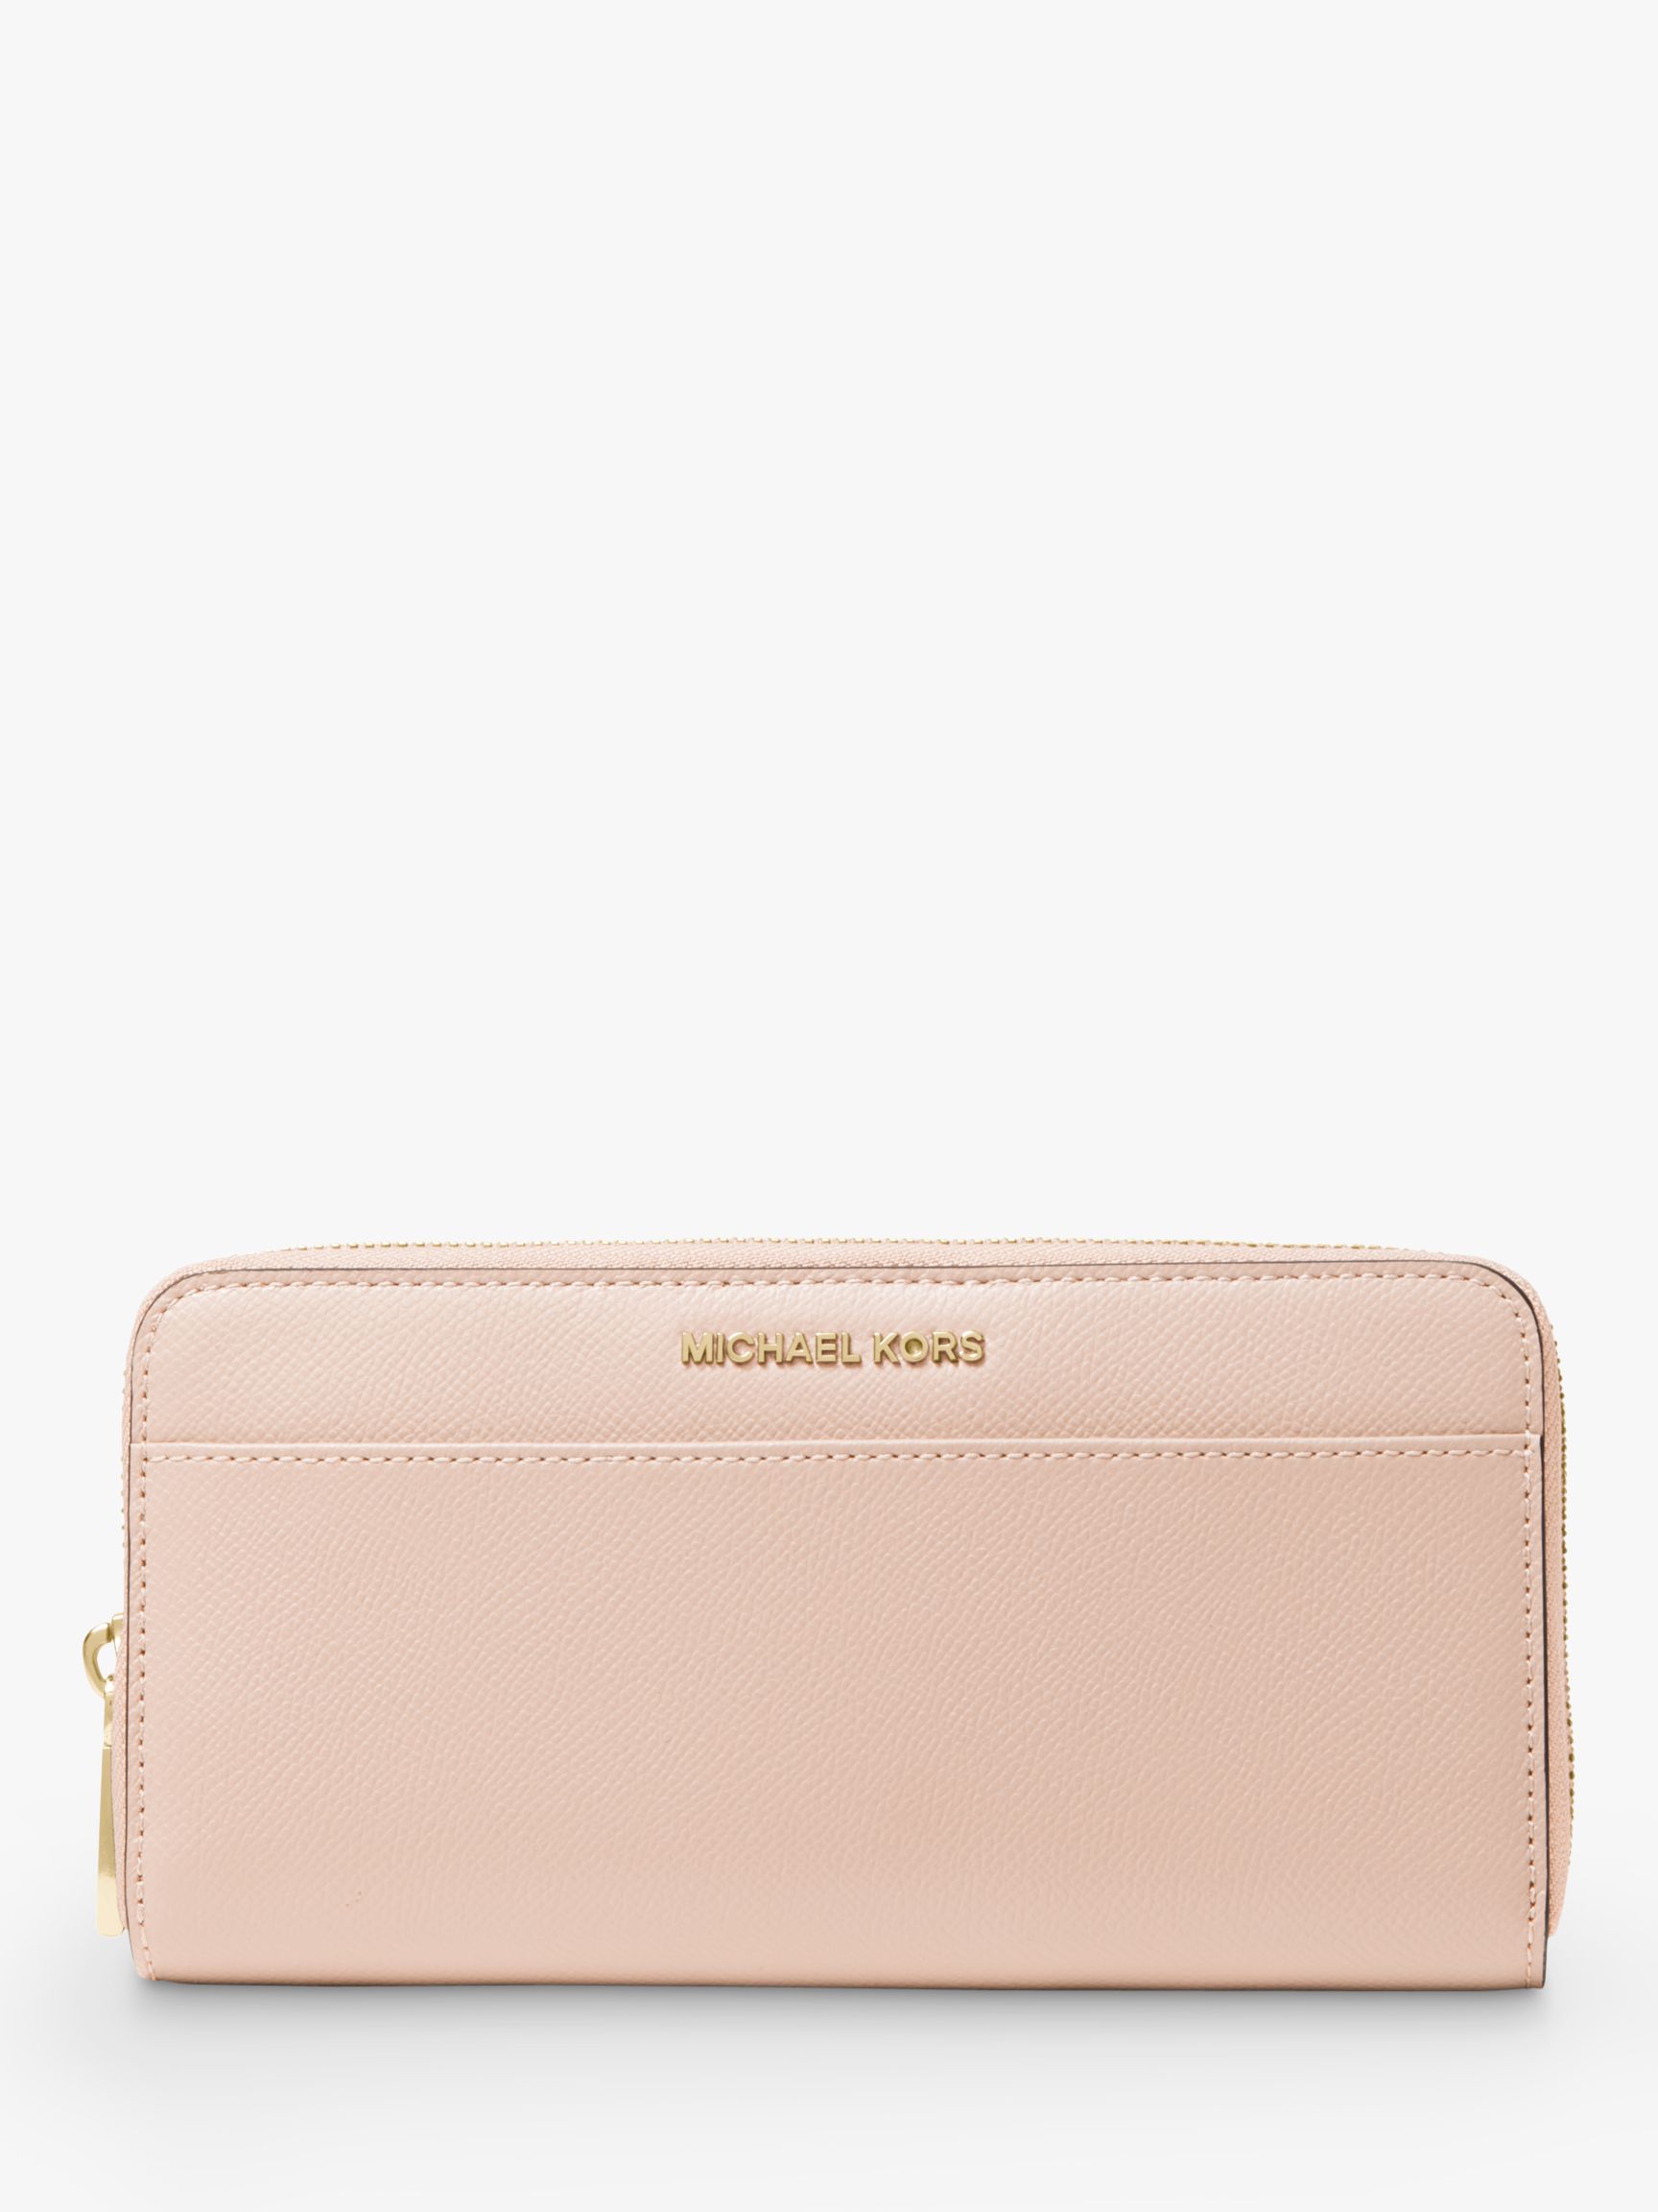 michael kors wallet soft pink